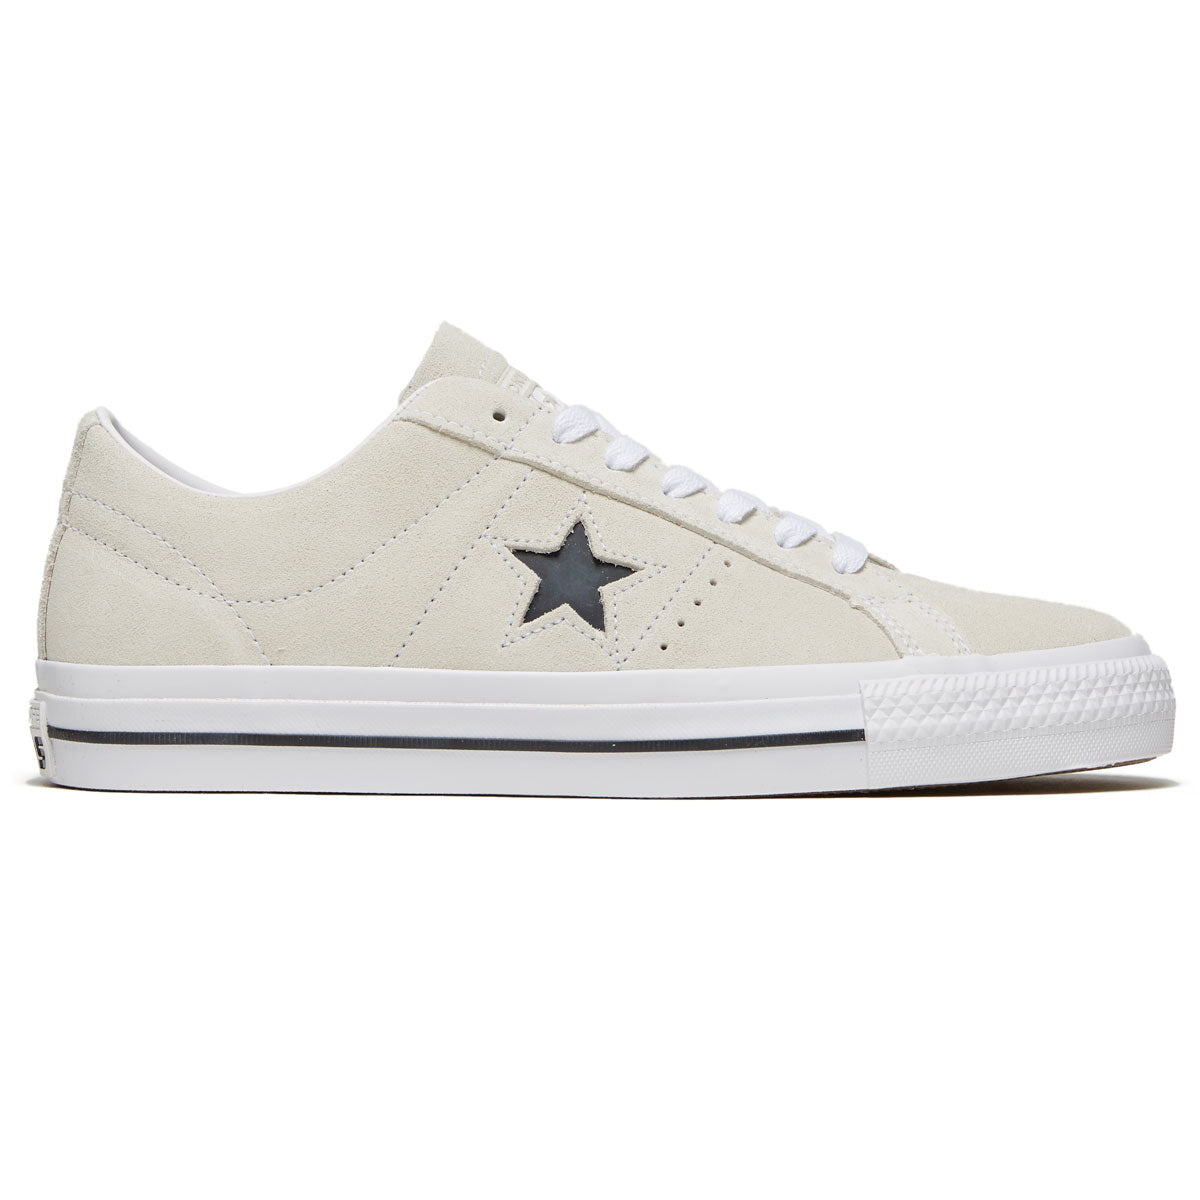 Converse One Star Pro Suede Shoes - Egret/White/Black – CCS